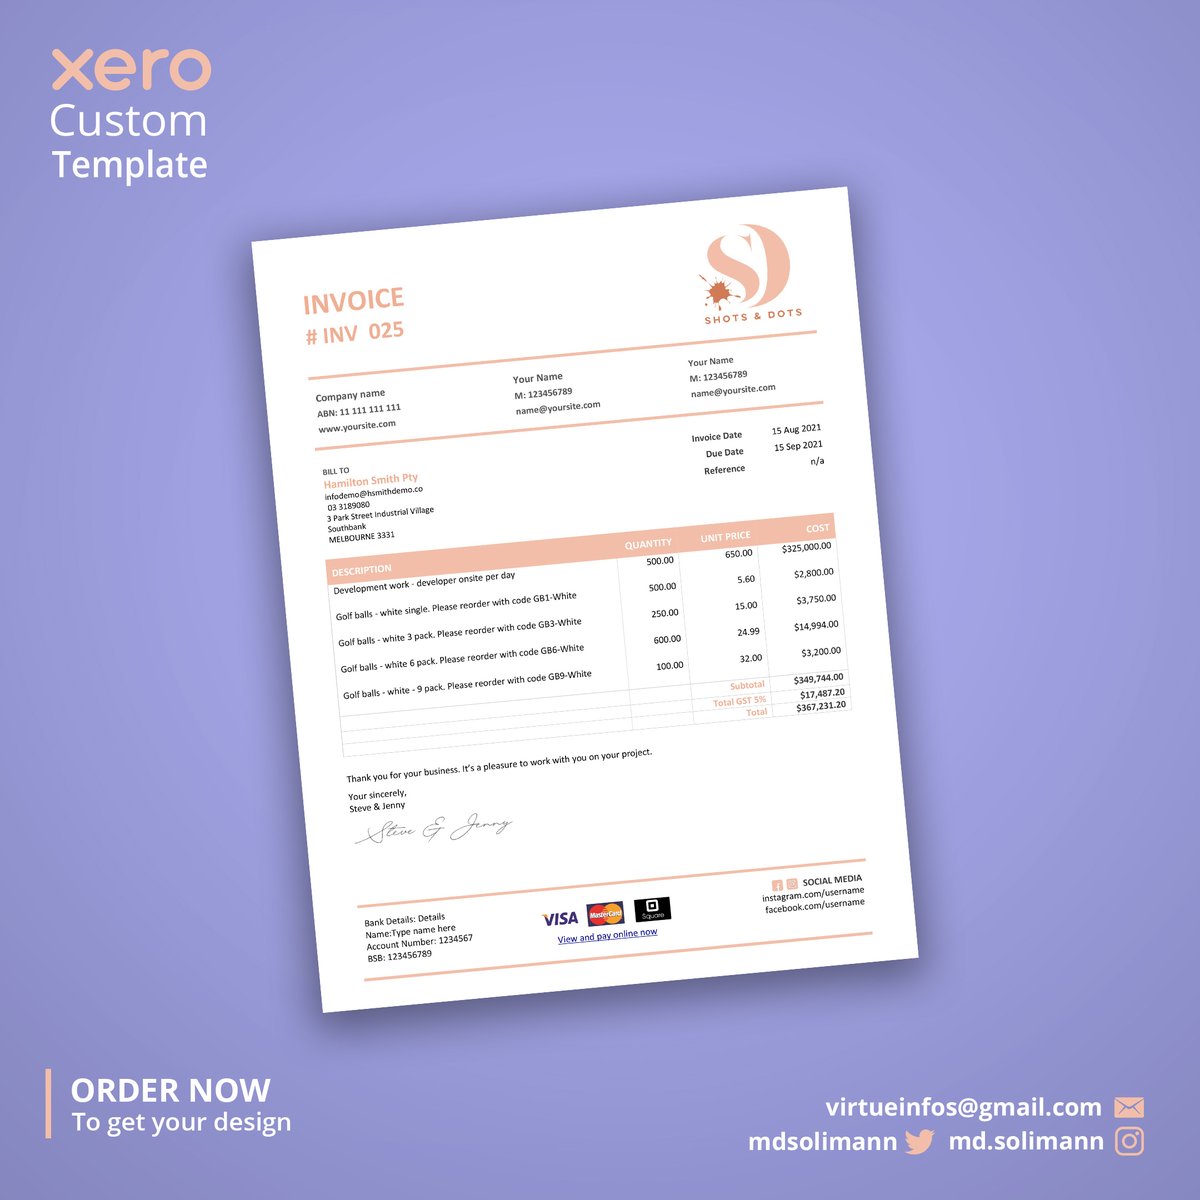 Xero Custom Invoice Template Design
#Xero #Xeroinvoice #Xeroadvisor #XeroAustralia #Xerocon #XeroGold #XeroBookkeeper #XeroSoftware #Accountant #Bookkeepers #Business #BusinessSolution #SmallBiz #SmallBusinesshelp #Biz #SmallBusiness #SmallBusinessOwner #XeroExpert #SmallBizTips